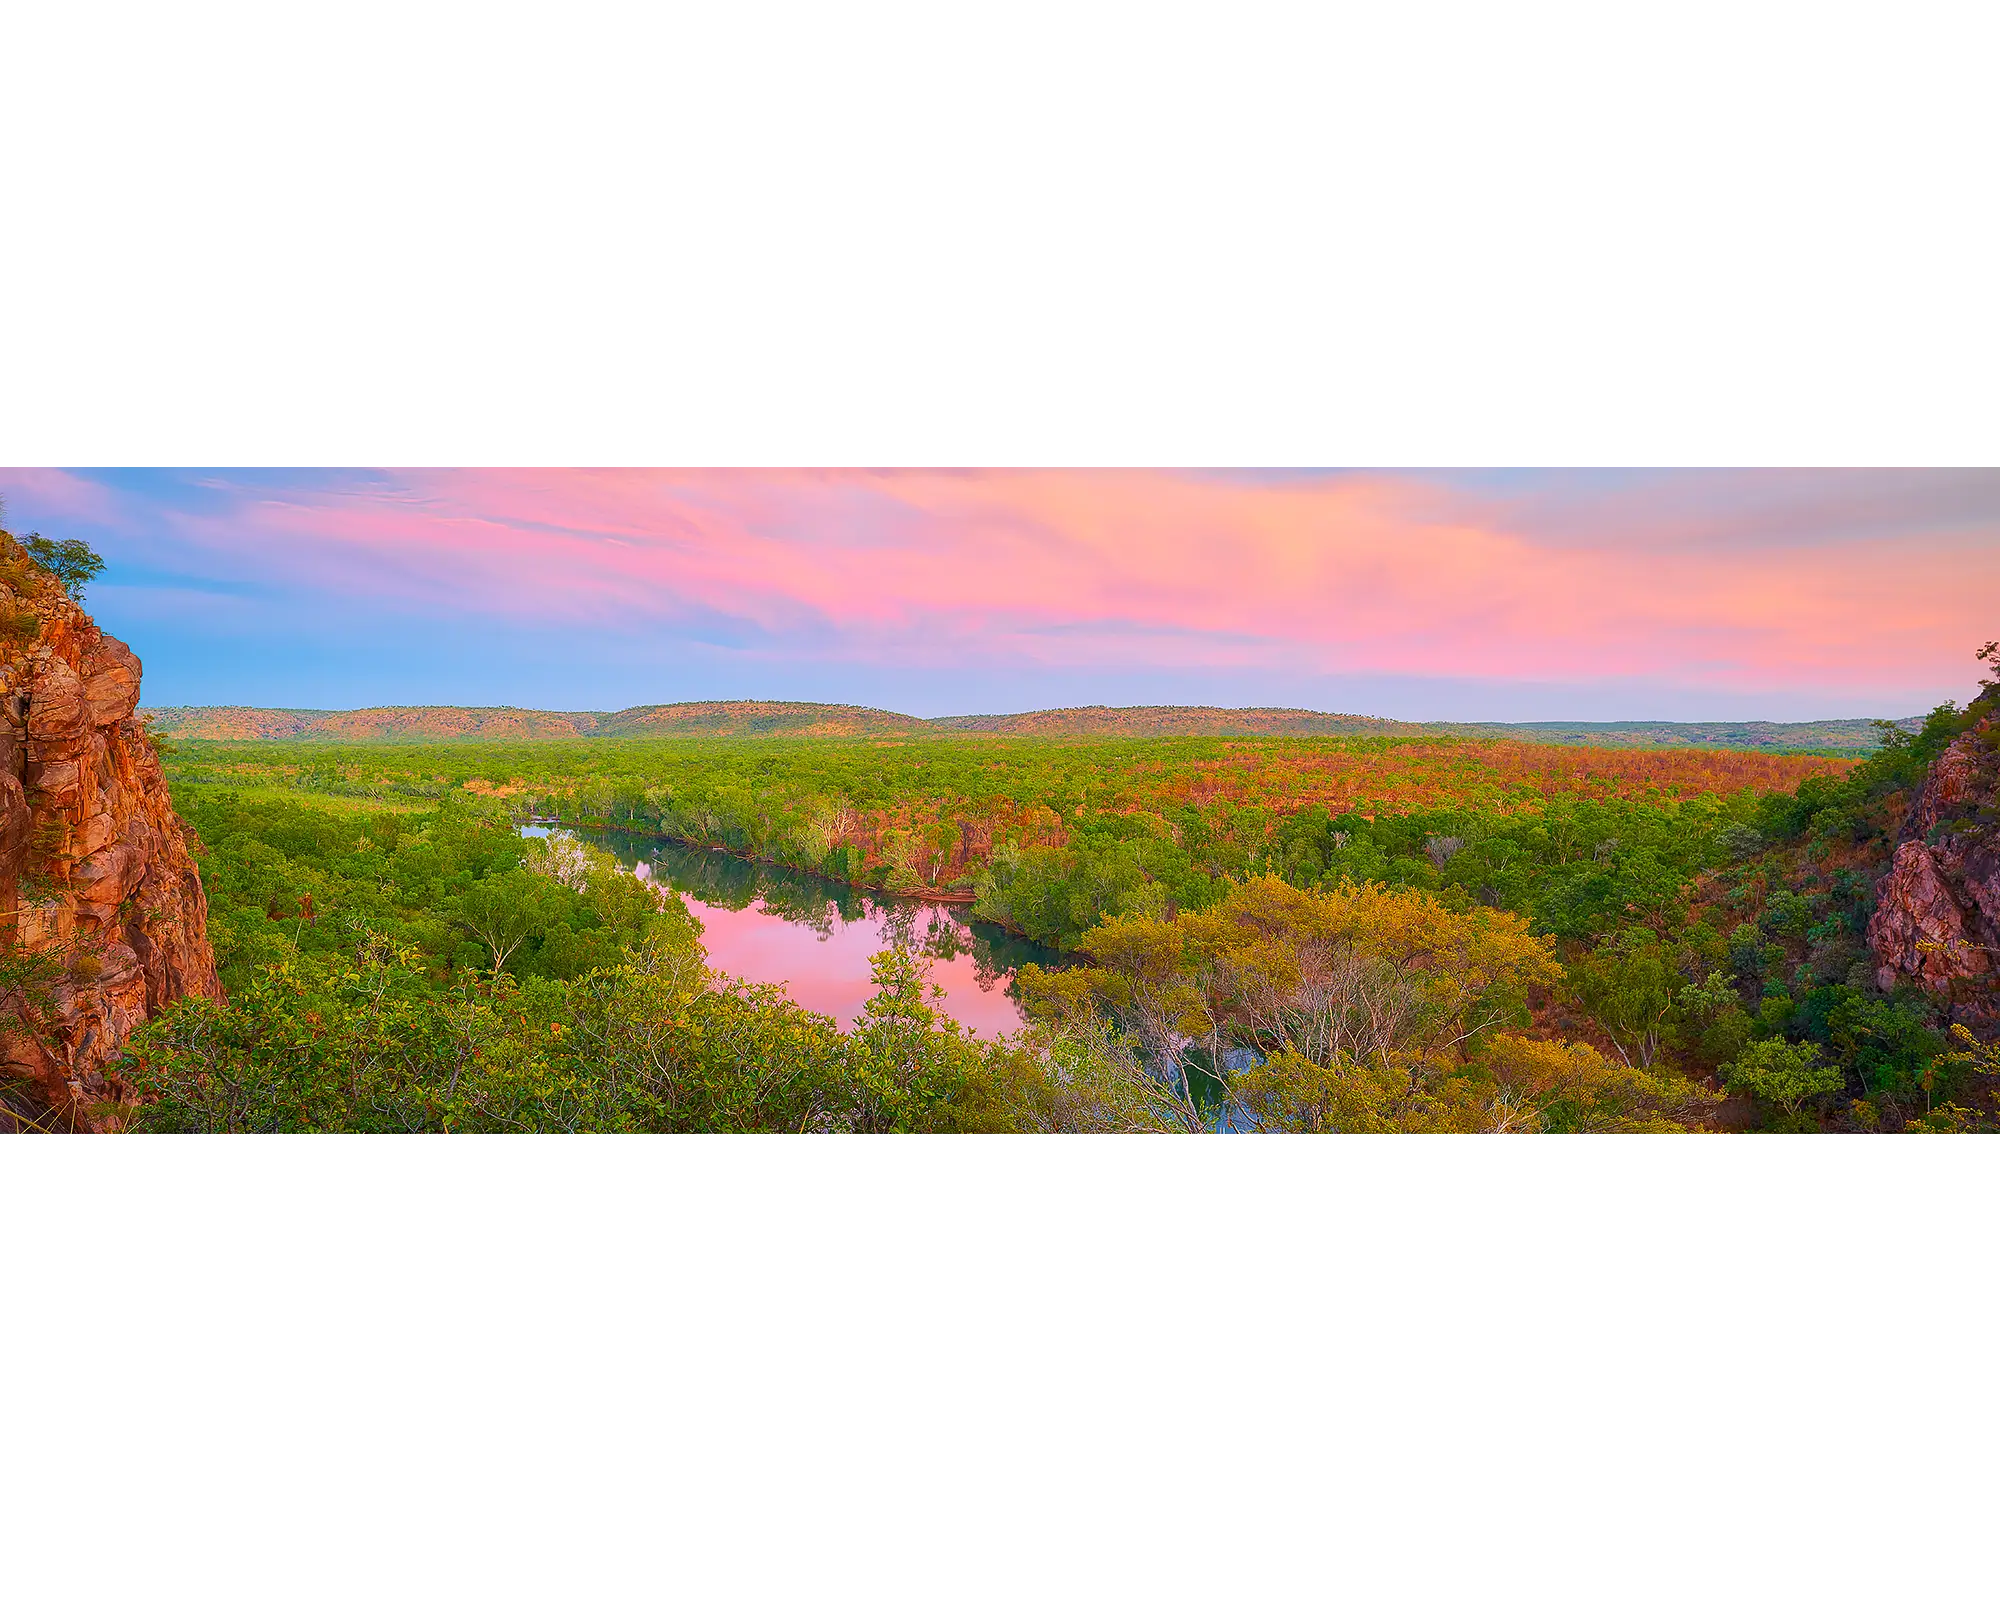 New Day. Sunrise, Katherine Gorge and Katherine River, Northern Territory, Australia.